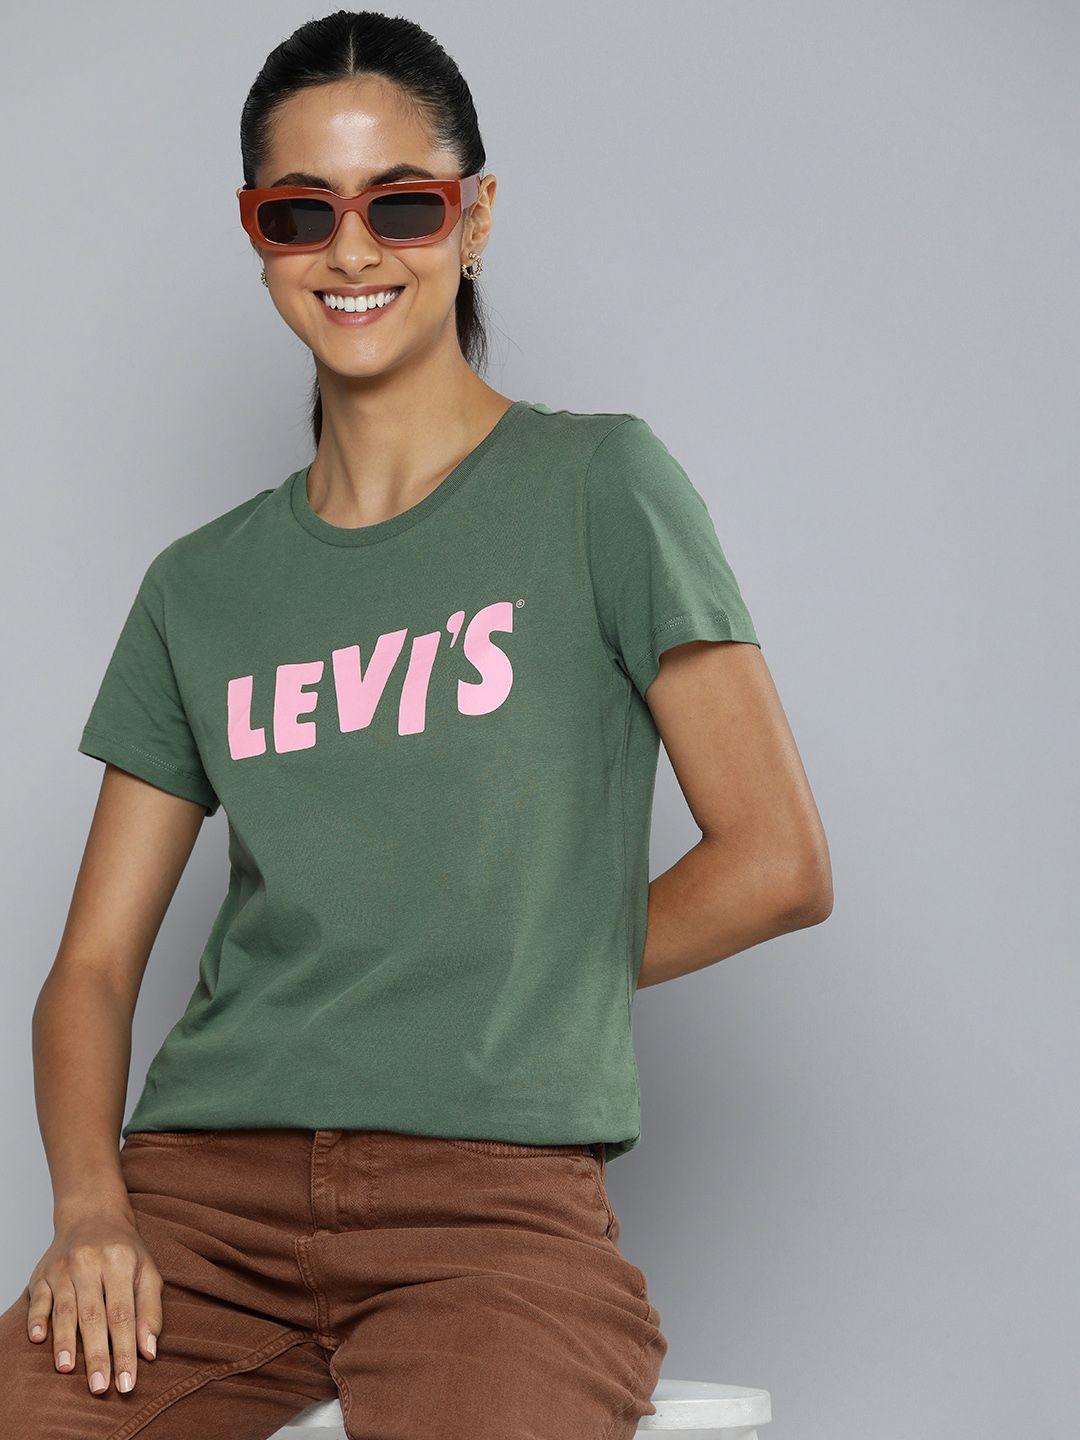 levis brand logo printed pure cotton t-shirt